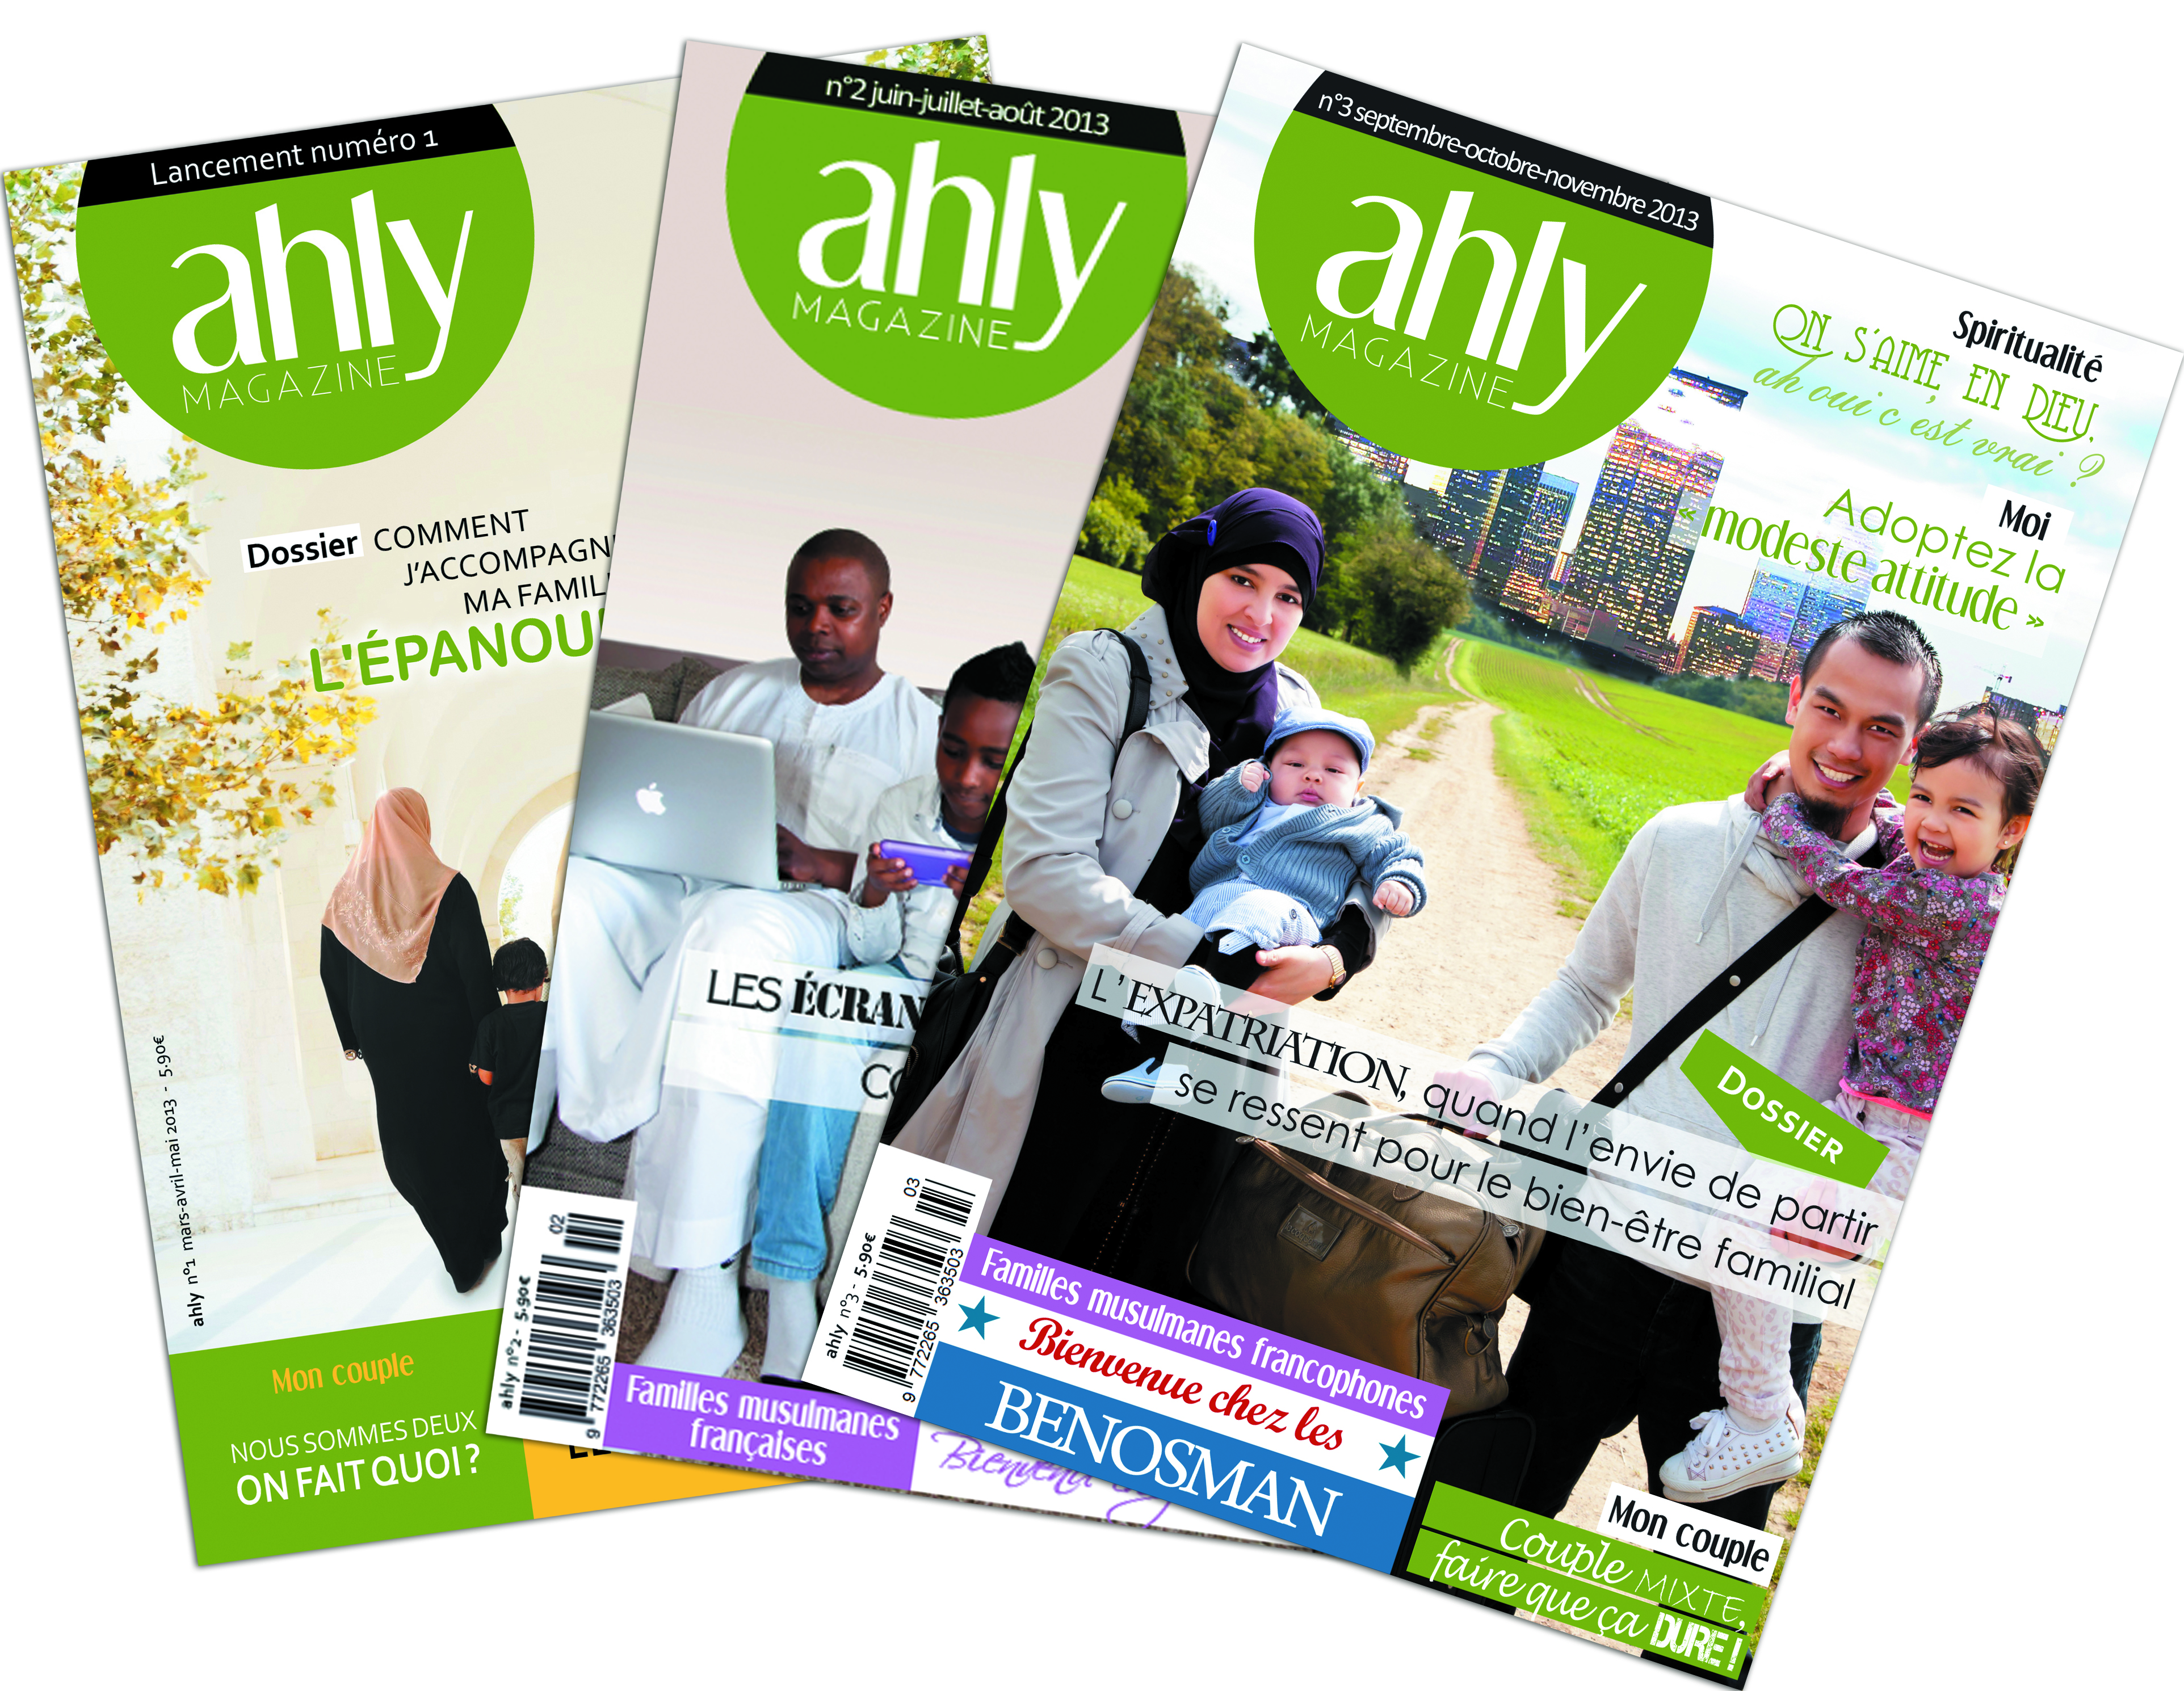 Ahly Magazine : Vers l’harmonie familiale